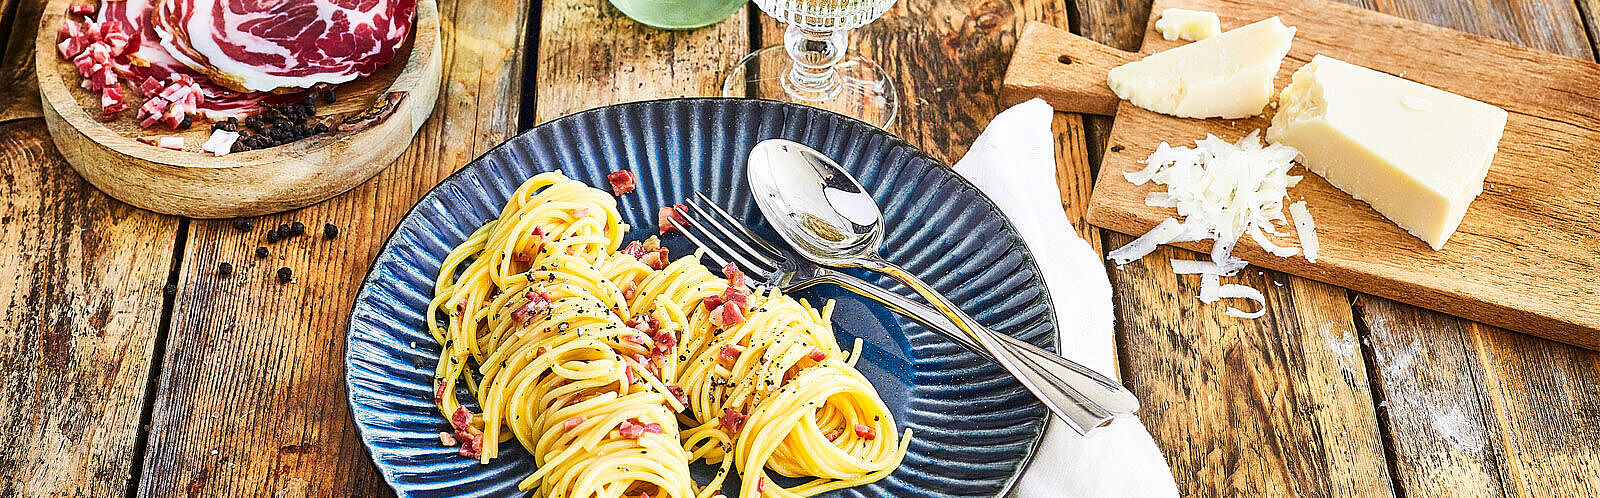 Spaghetti Carbonara mit Pancetta